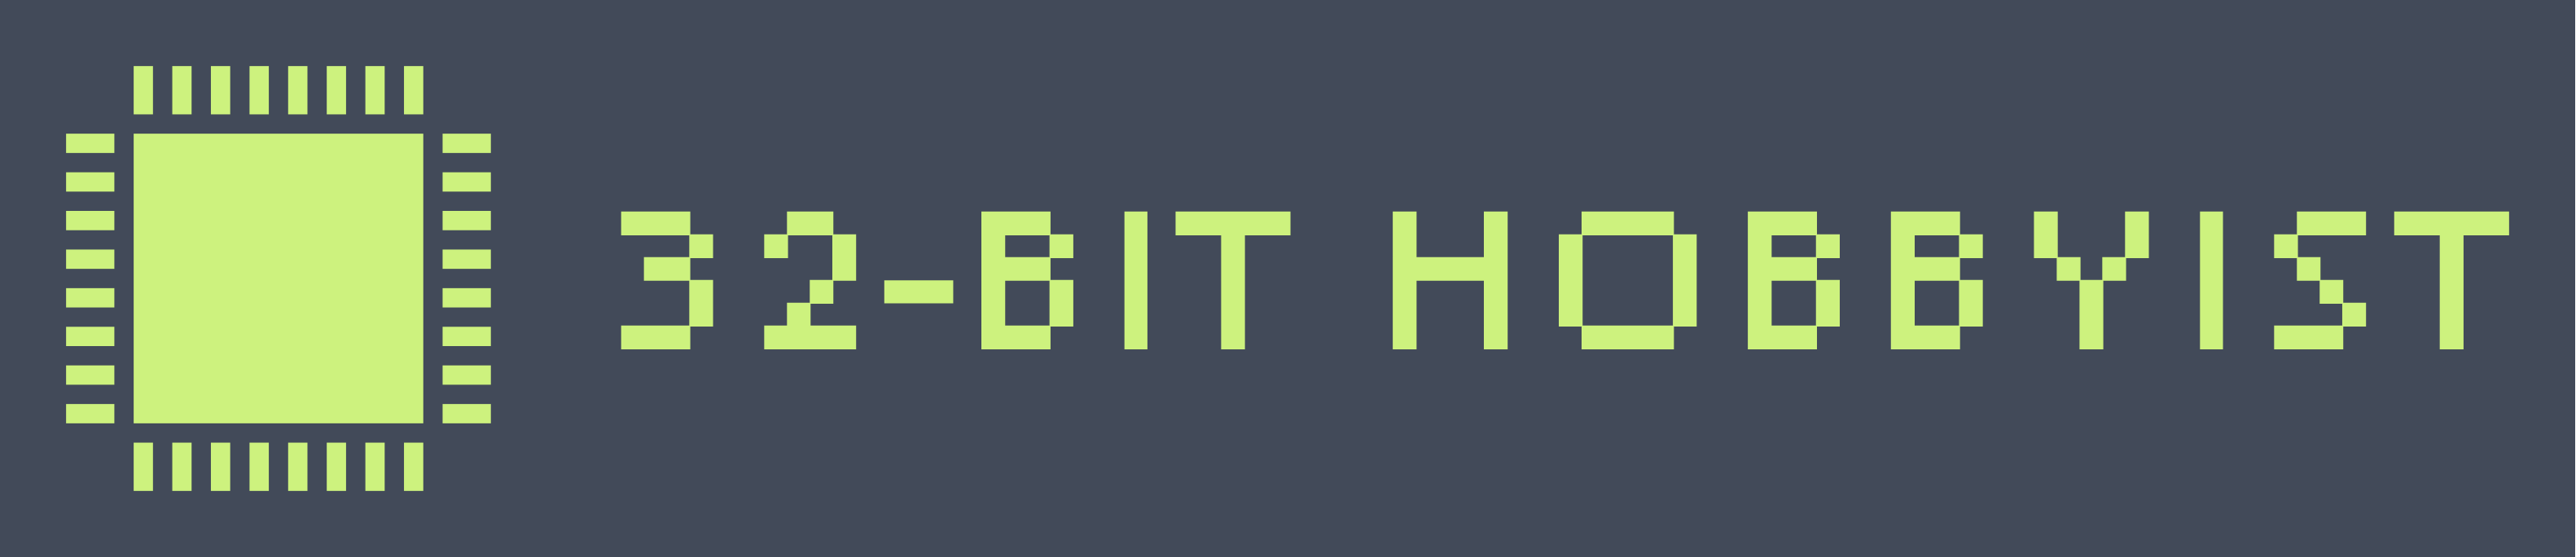 32-bit Hobbyist logo